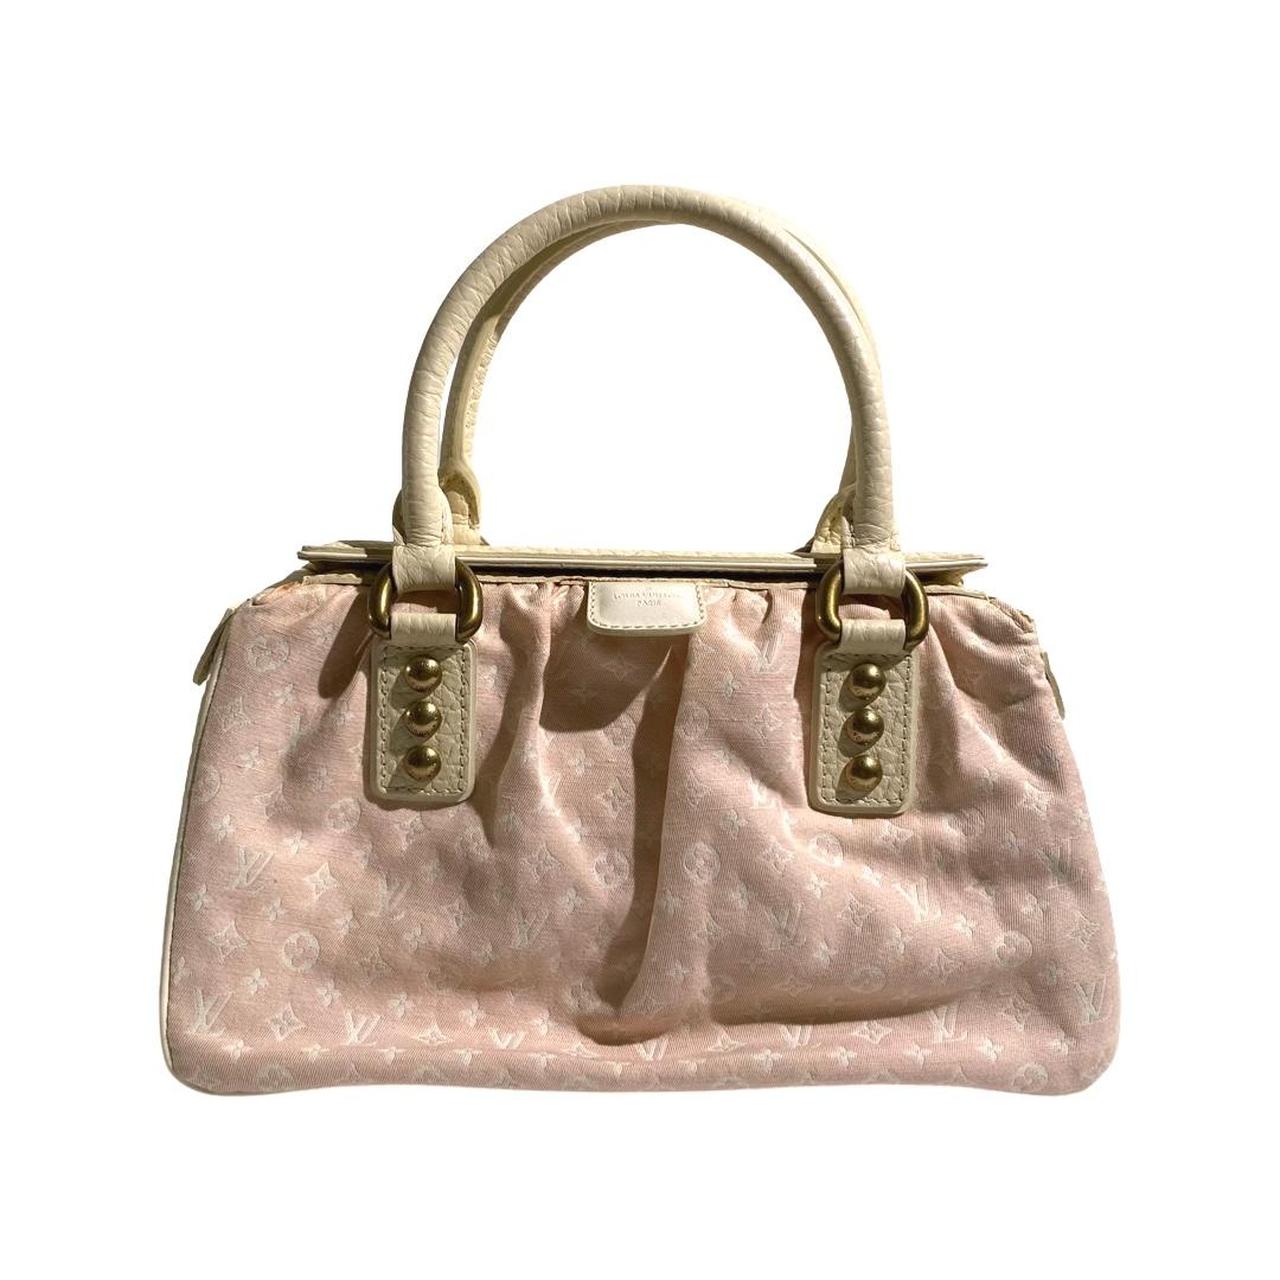 Louis Vuitton mini Lin diaper bag in pink